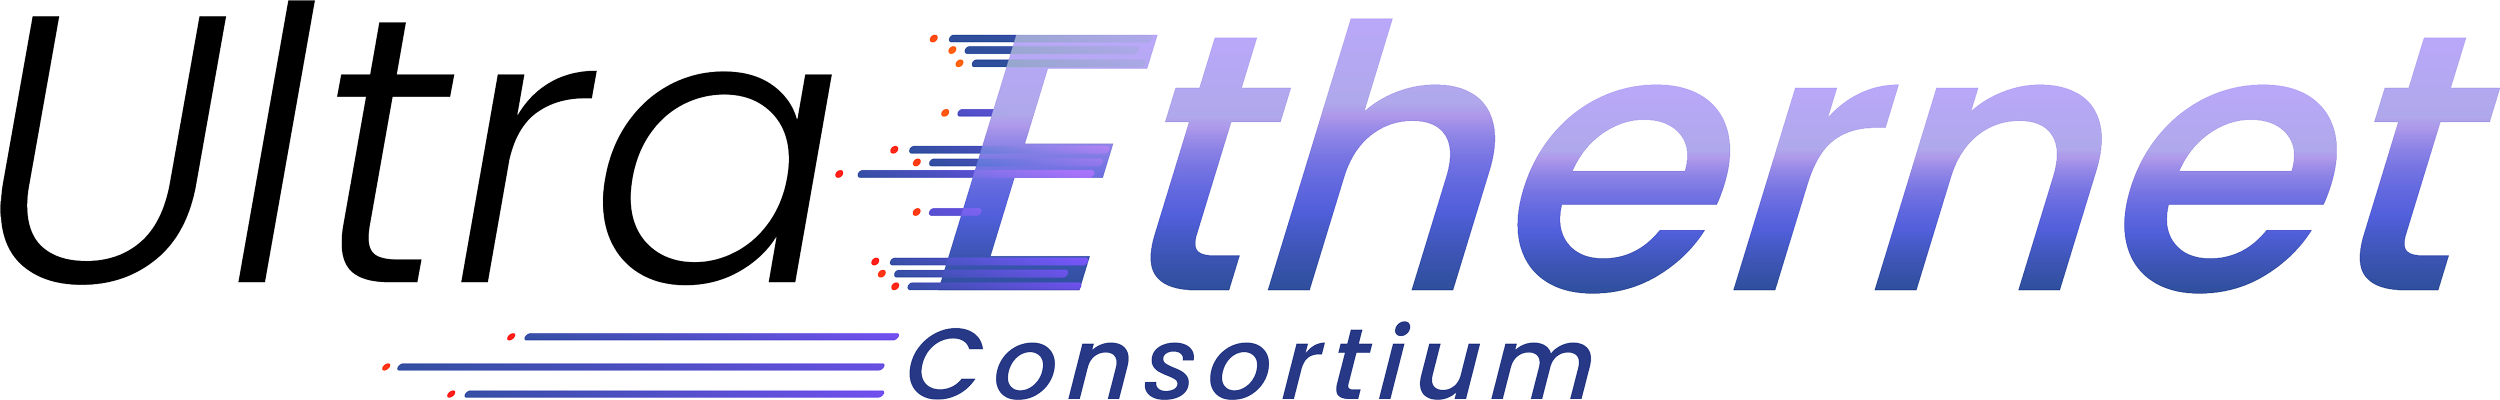 ultra ethernet consortium logo 2023